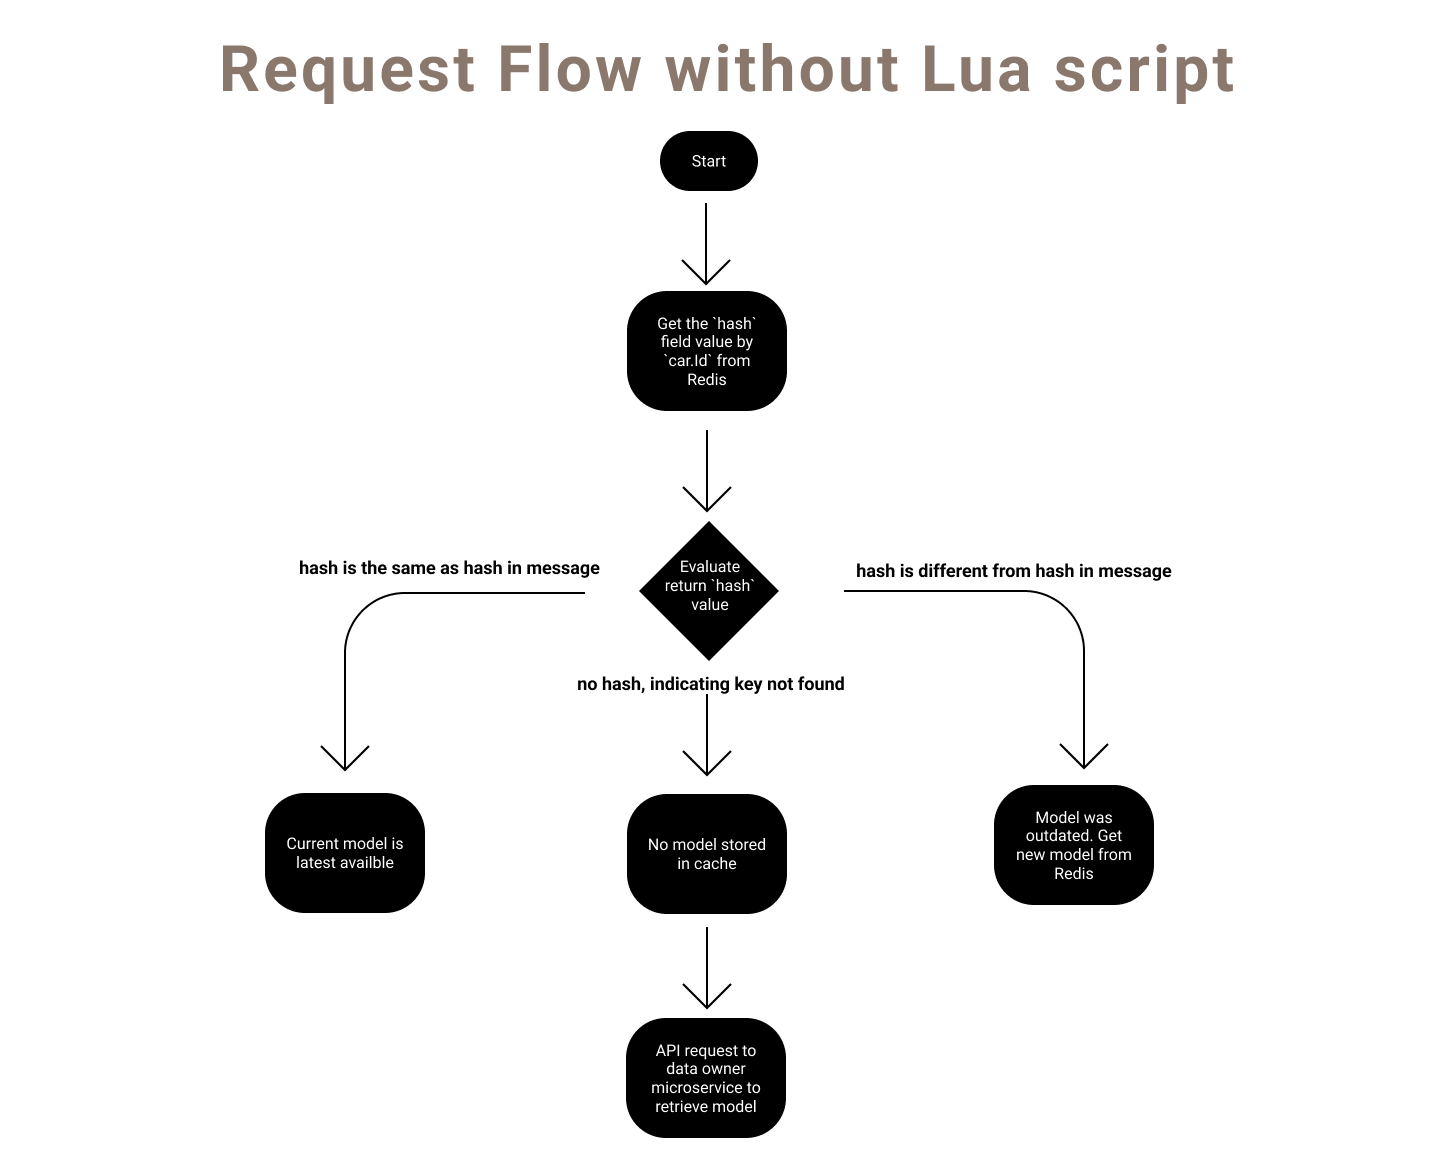 Improving performance through Lua scripts in Redis using TypeScript